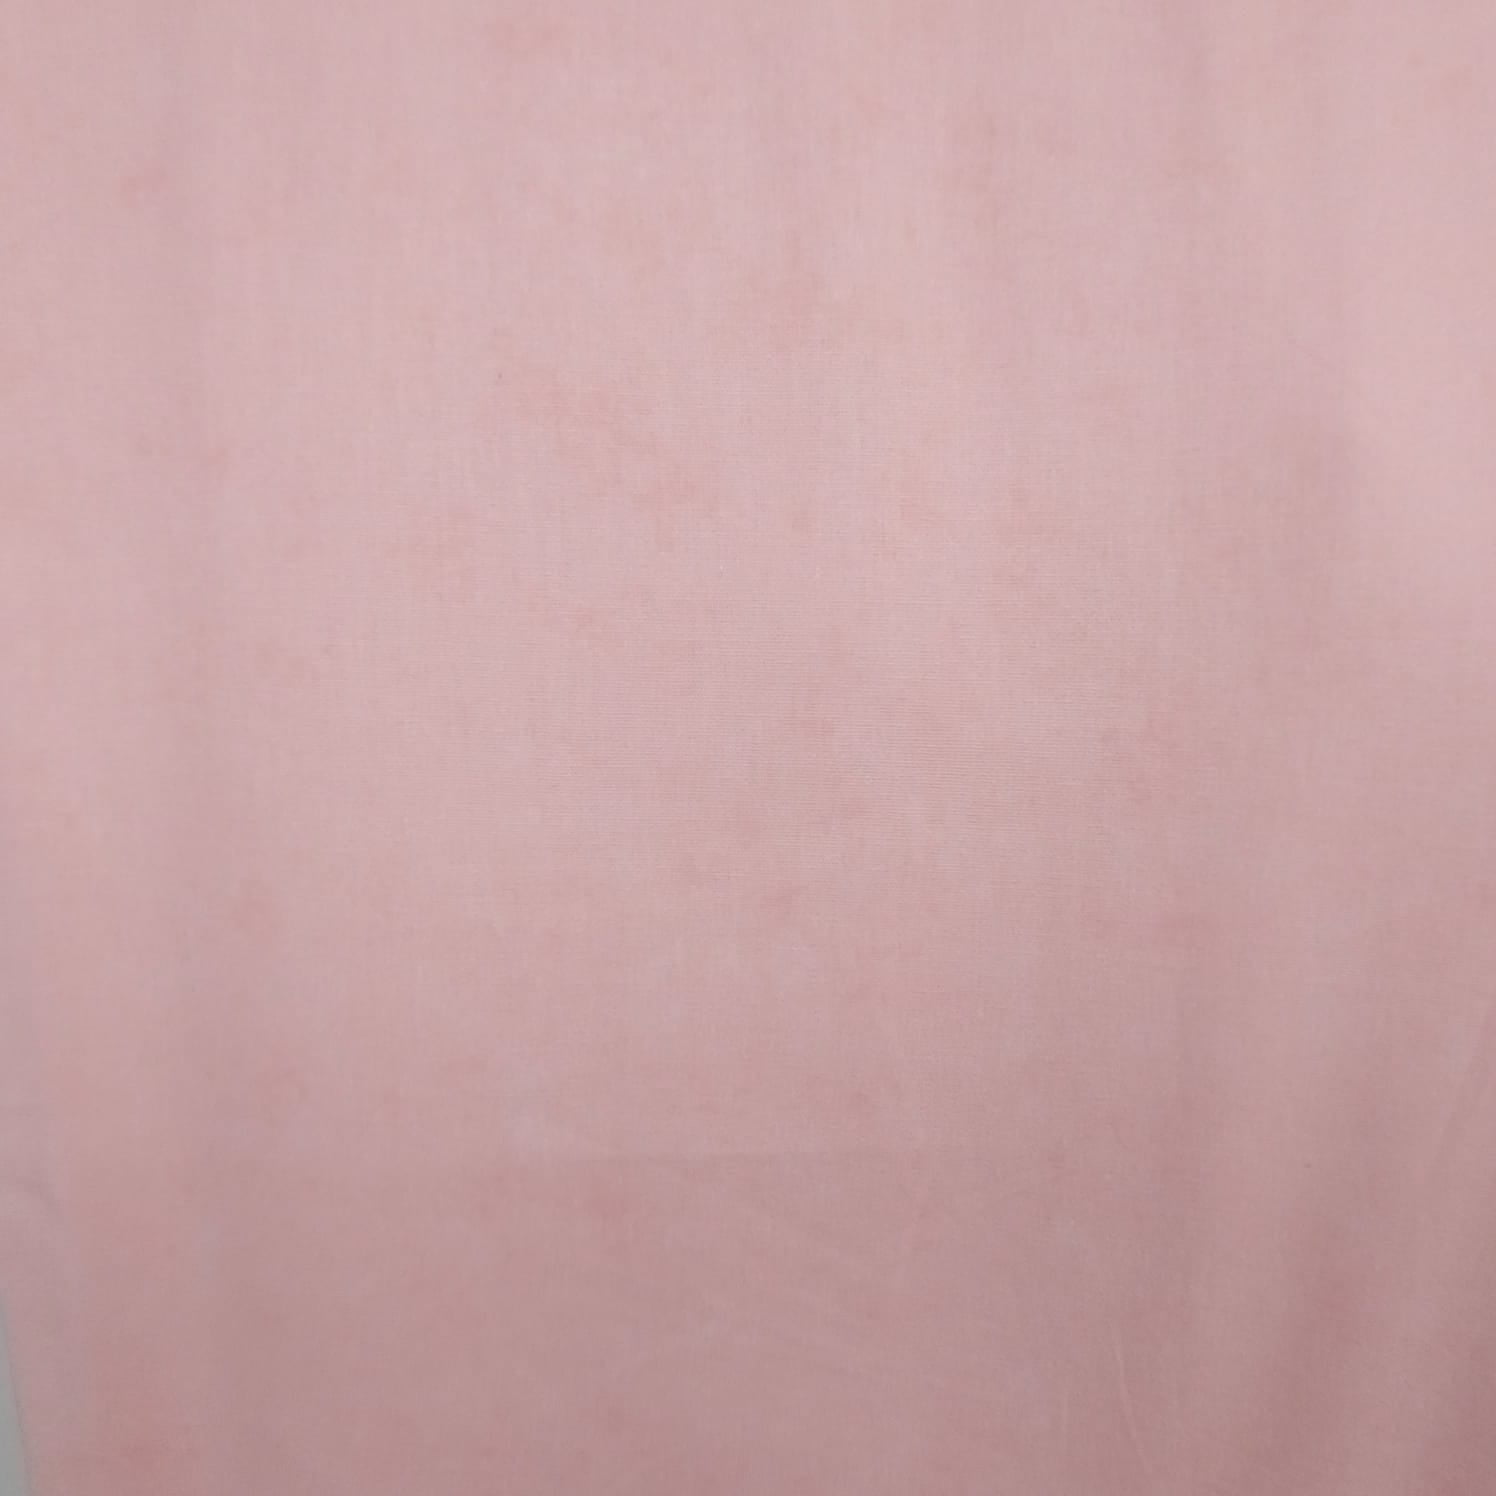 Tecido tricoline - estonado Rosa Bebe - Cris Mazzer  (50 x 1,50 cm)    